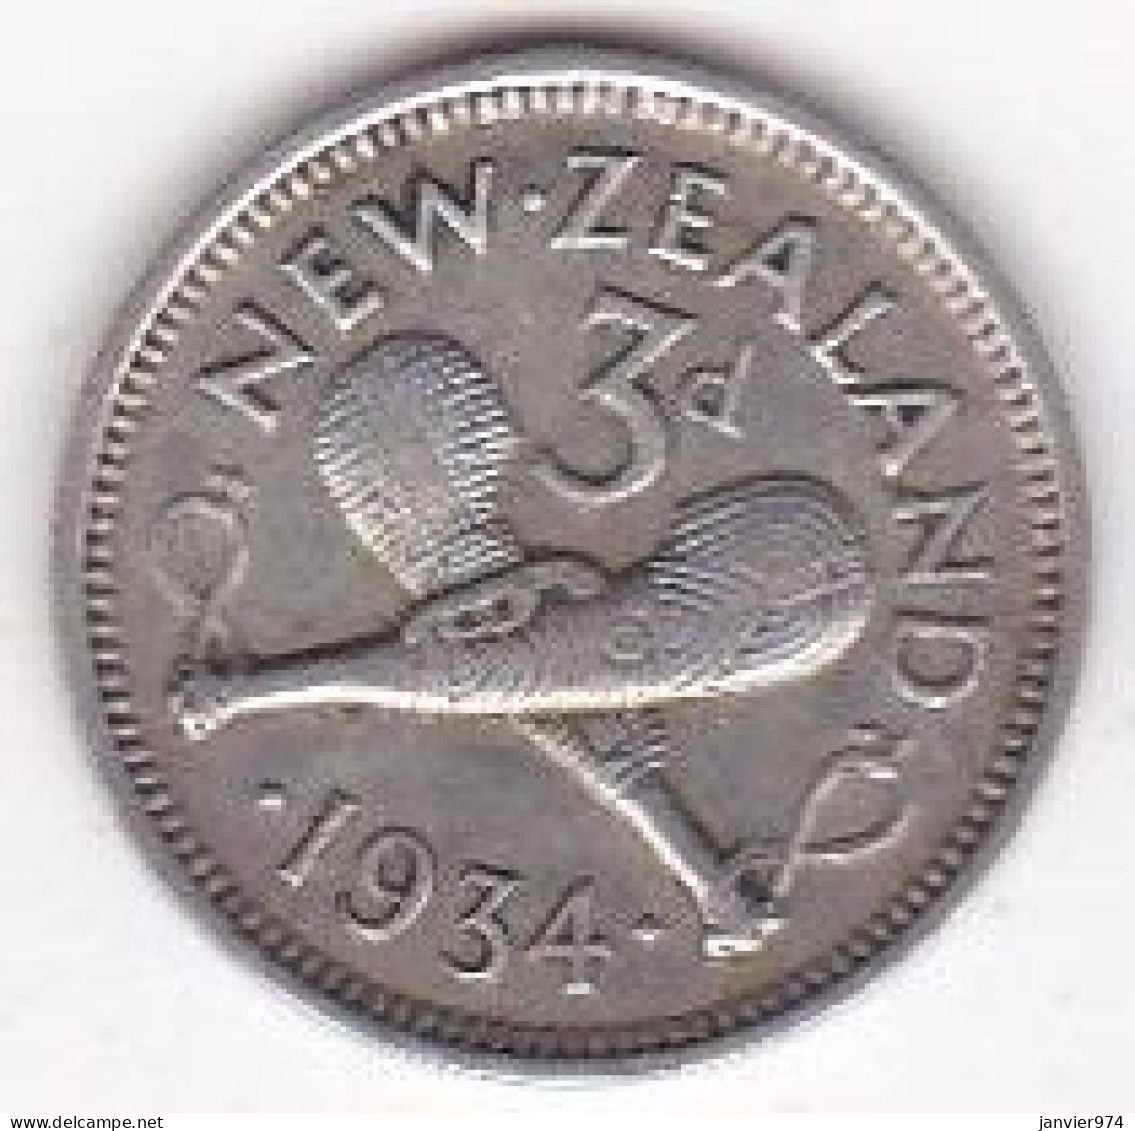 New Zealand, 3 Pence 1934 , George V, En Argent, KM# 1 - Neuseeland